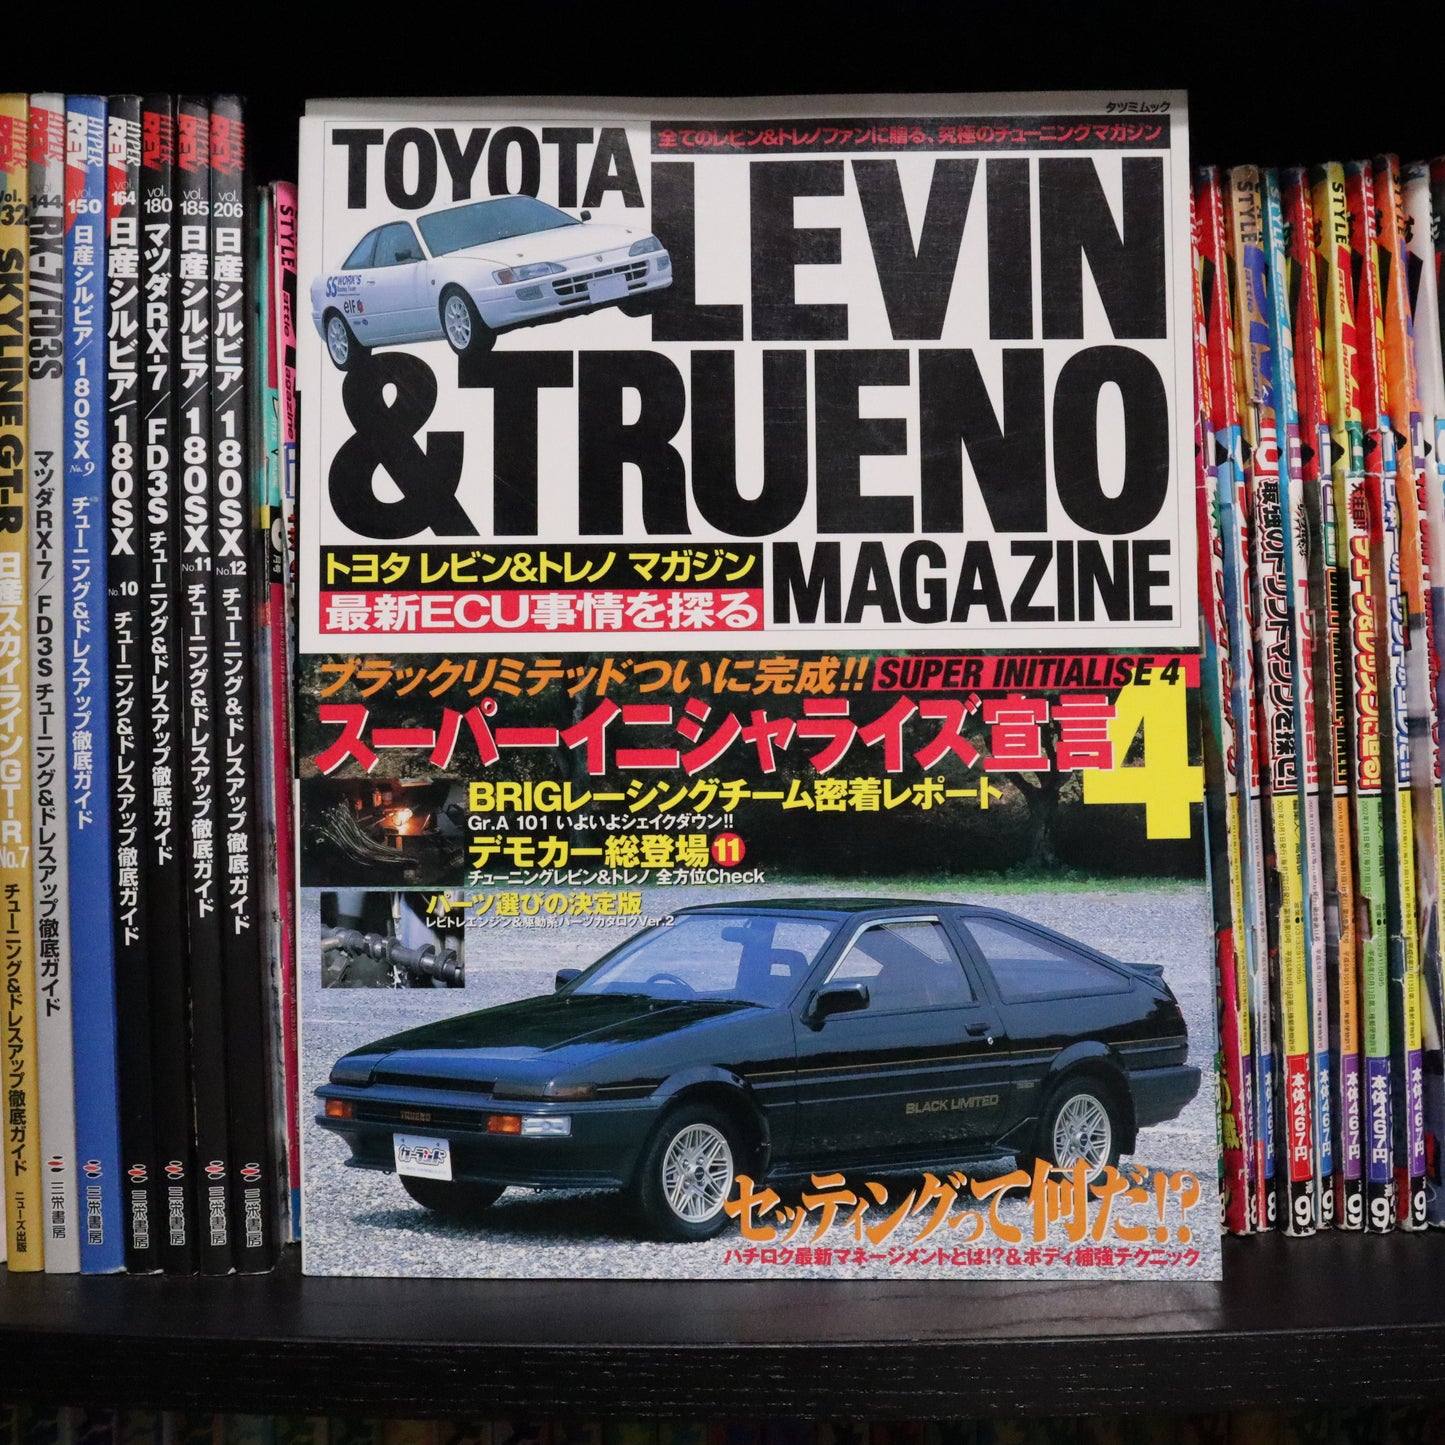 Toyota Levin & Trueno Magazine Vol. 11